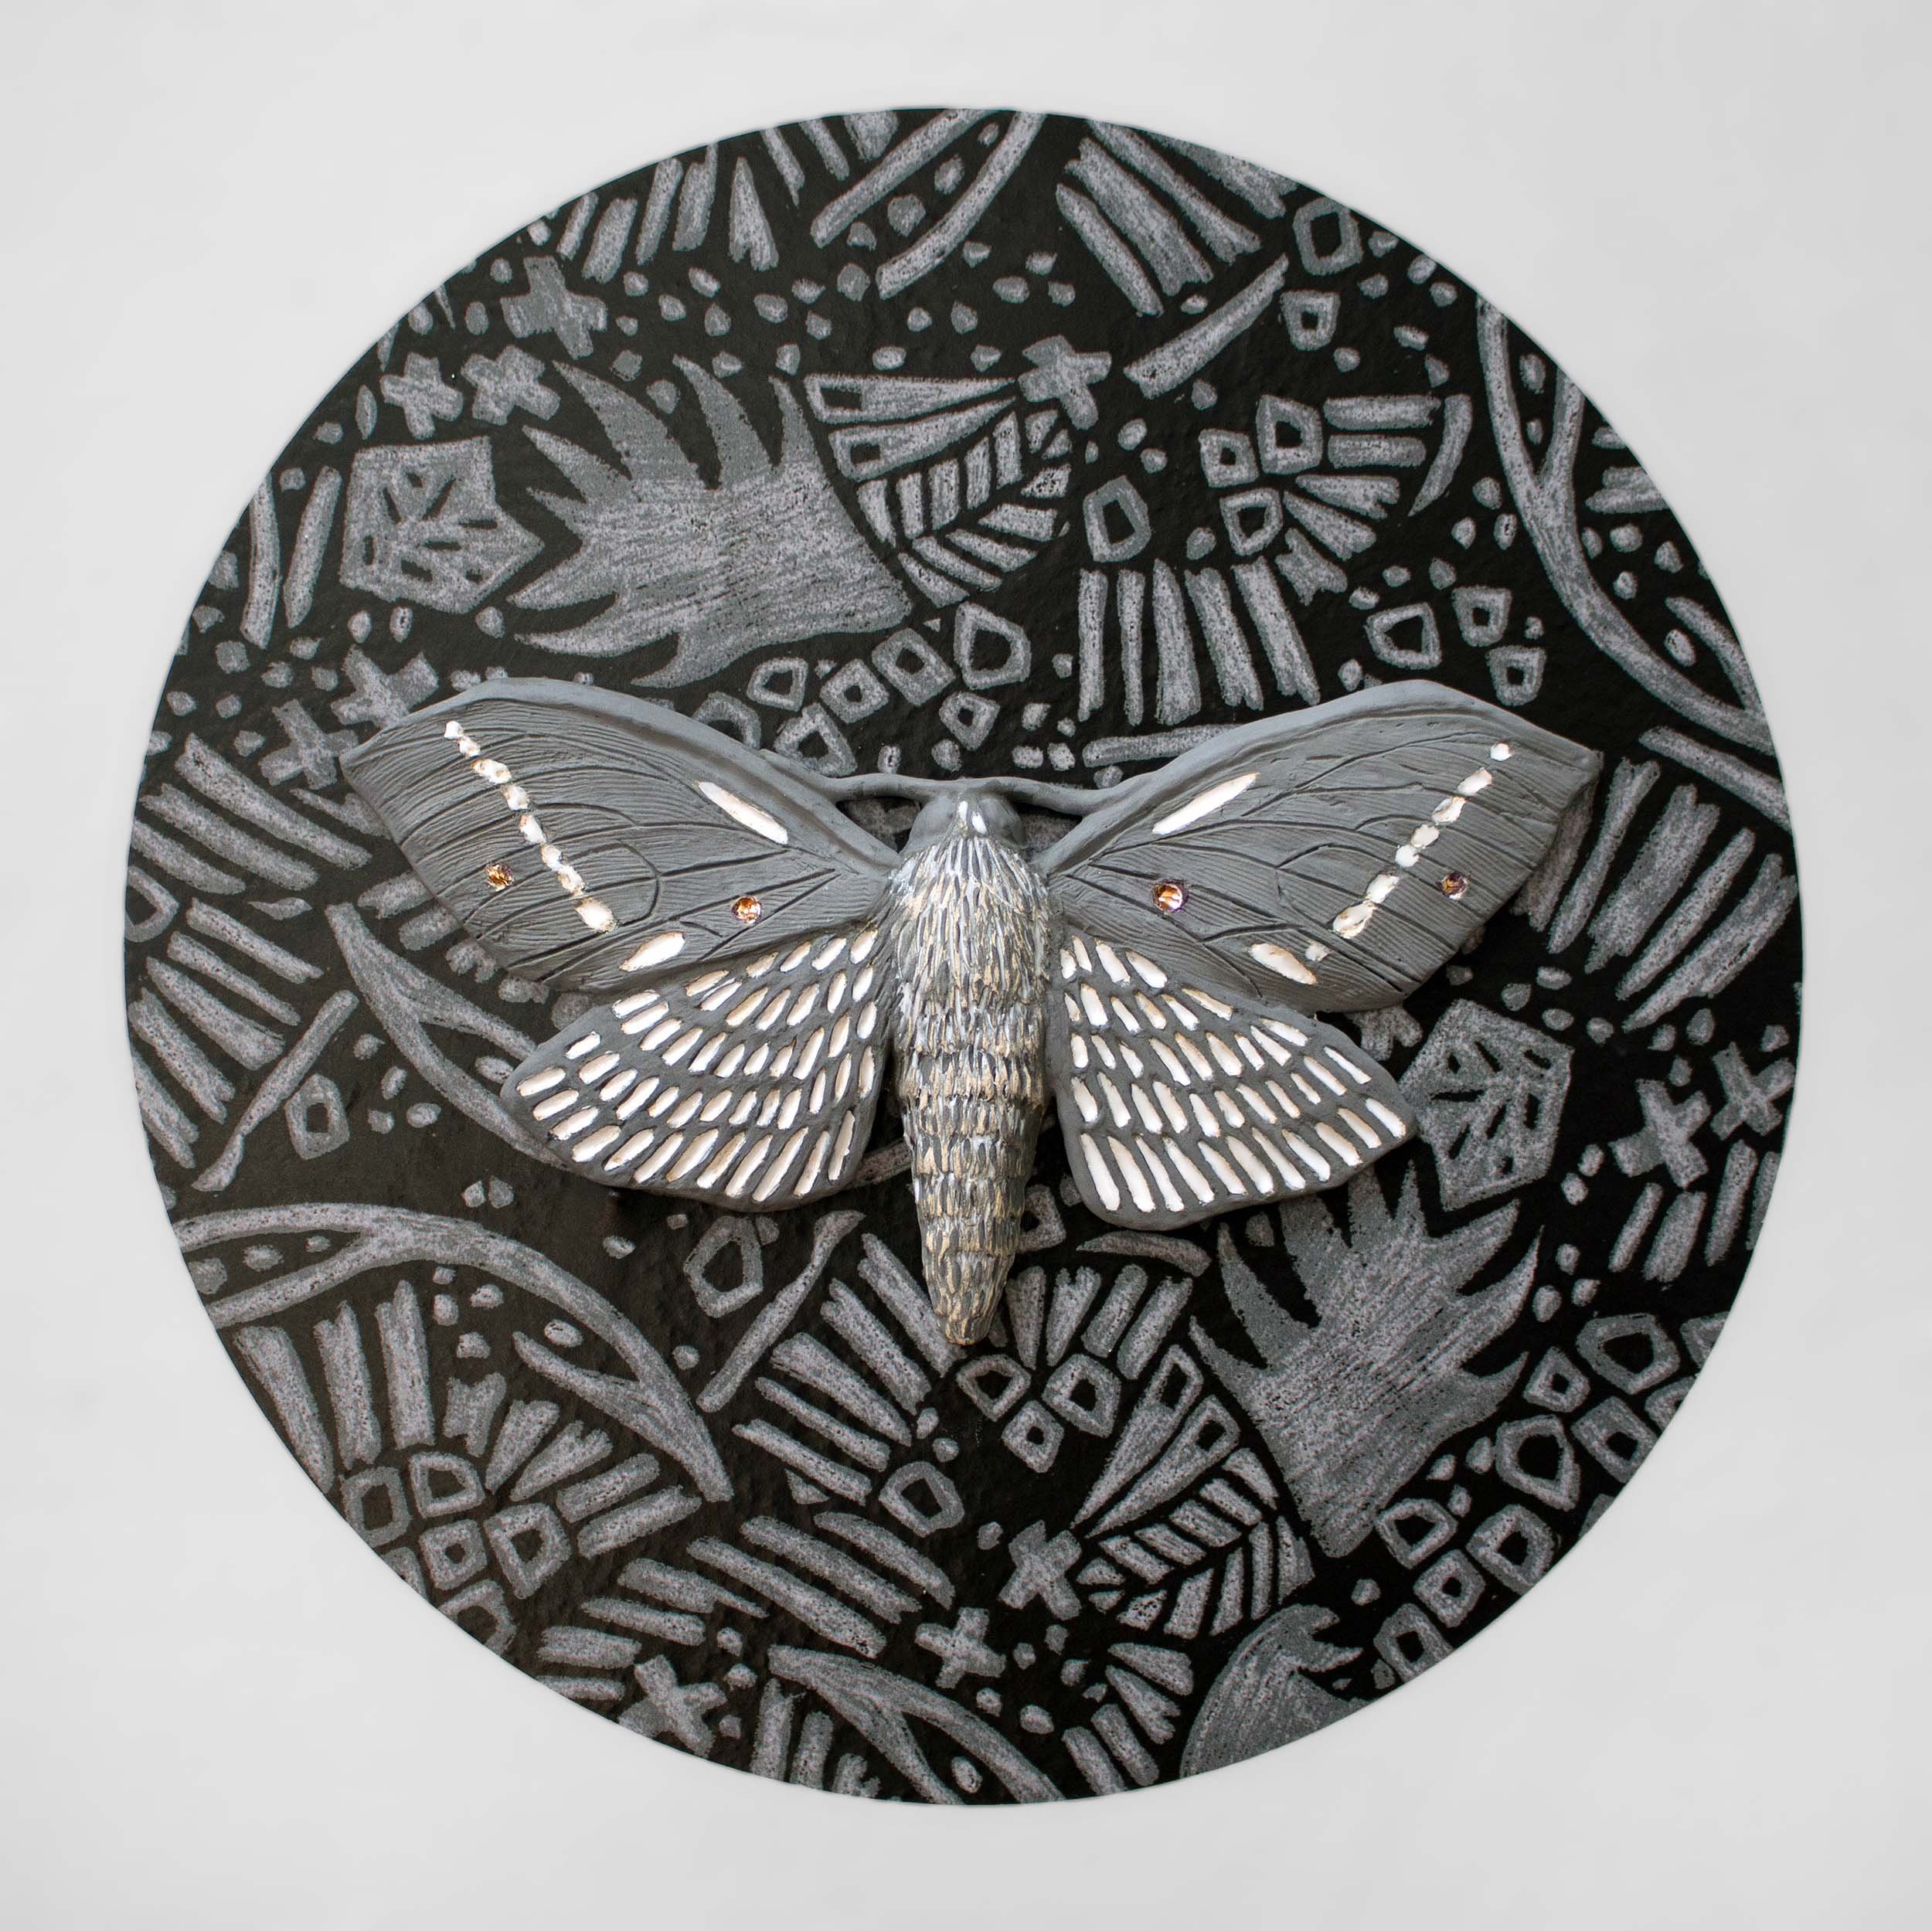   Moth 07,  ceramic moth mounted on wallpaper backdrop, 11.5”x11.5”x.5”, SOLD 